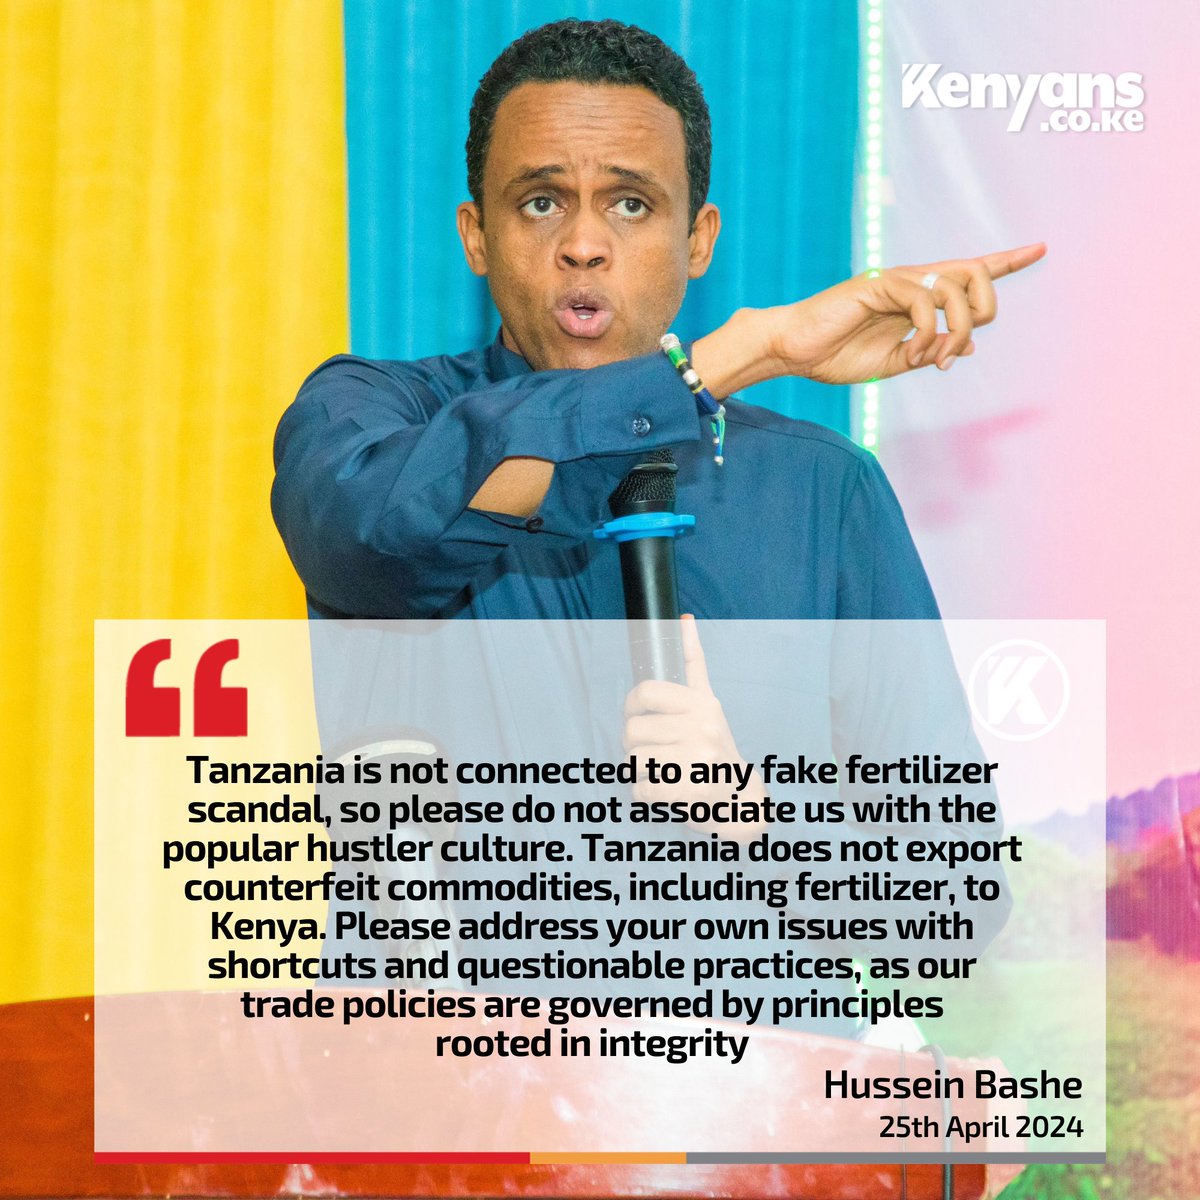 @Kenyans Jamani sisi hatufanyi biashara gushi, tueshimiane. Tanzania ministry tongue lashed his Kenyan counterpart